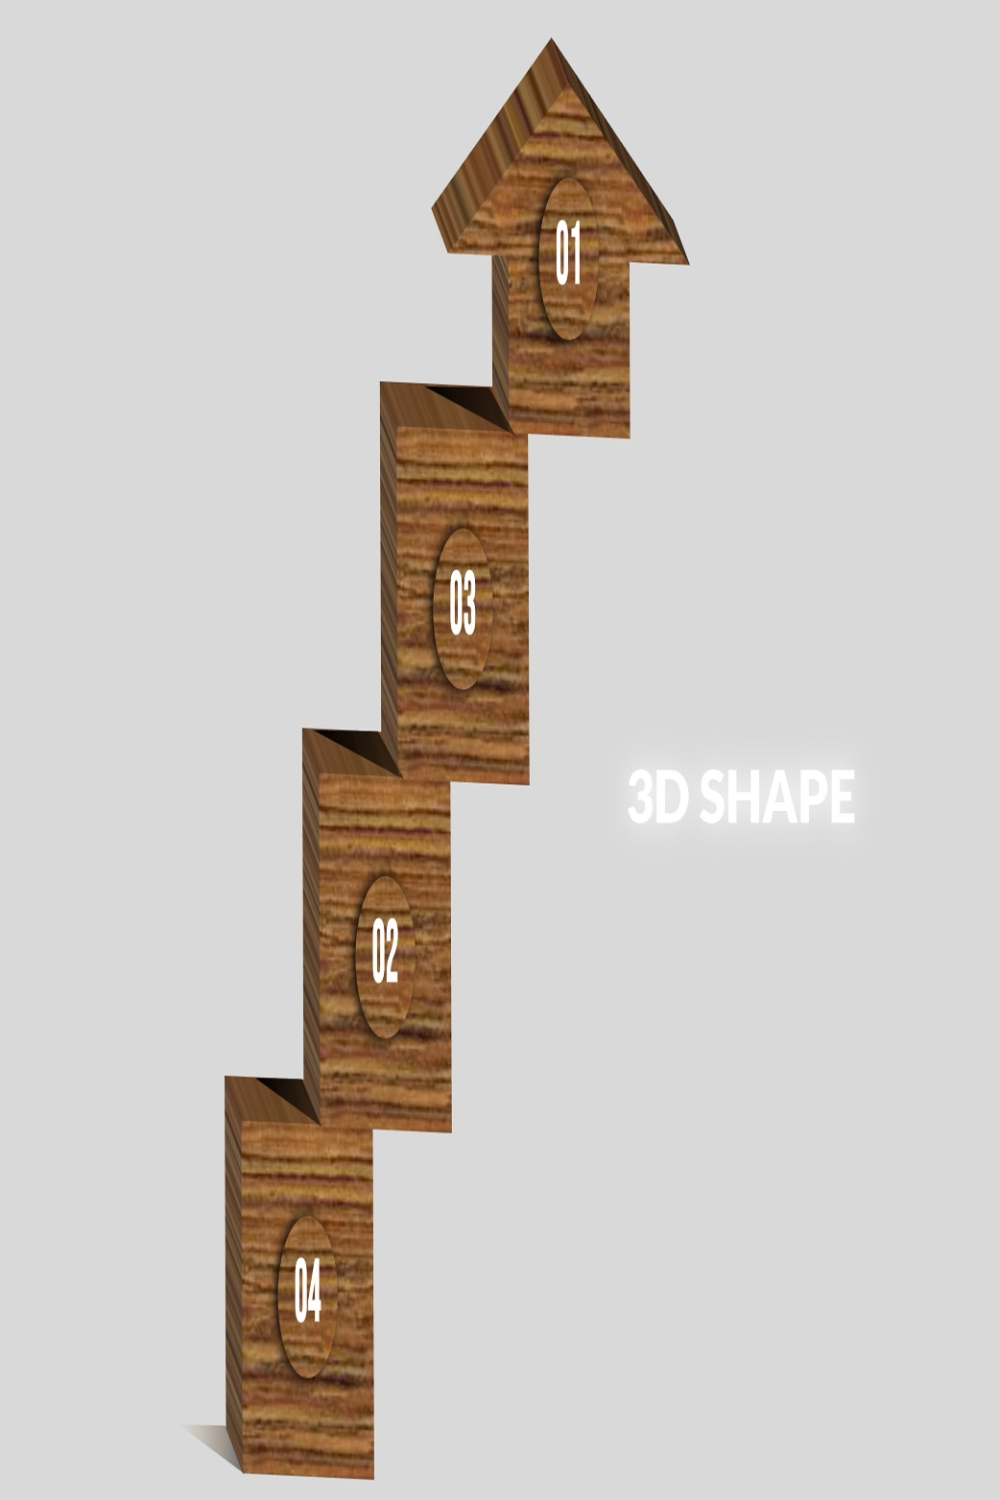 Creative 3D SHAPE DESIGN WOOD Illustration 3D WOOD pinterest preview image.